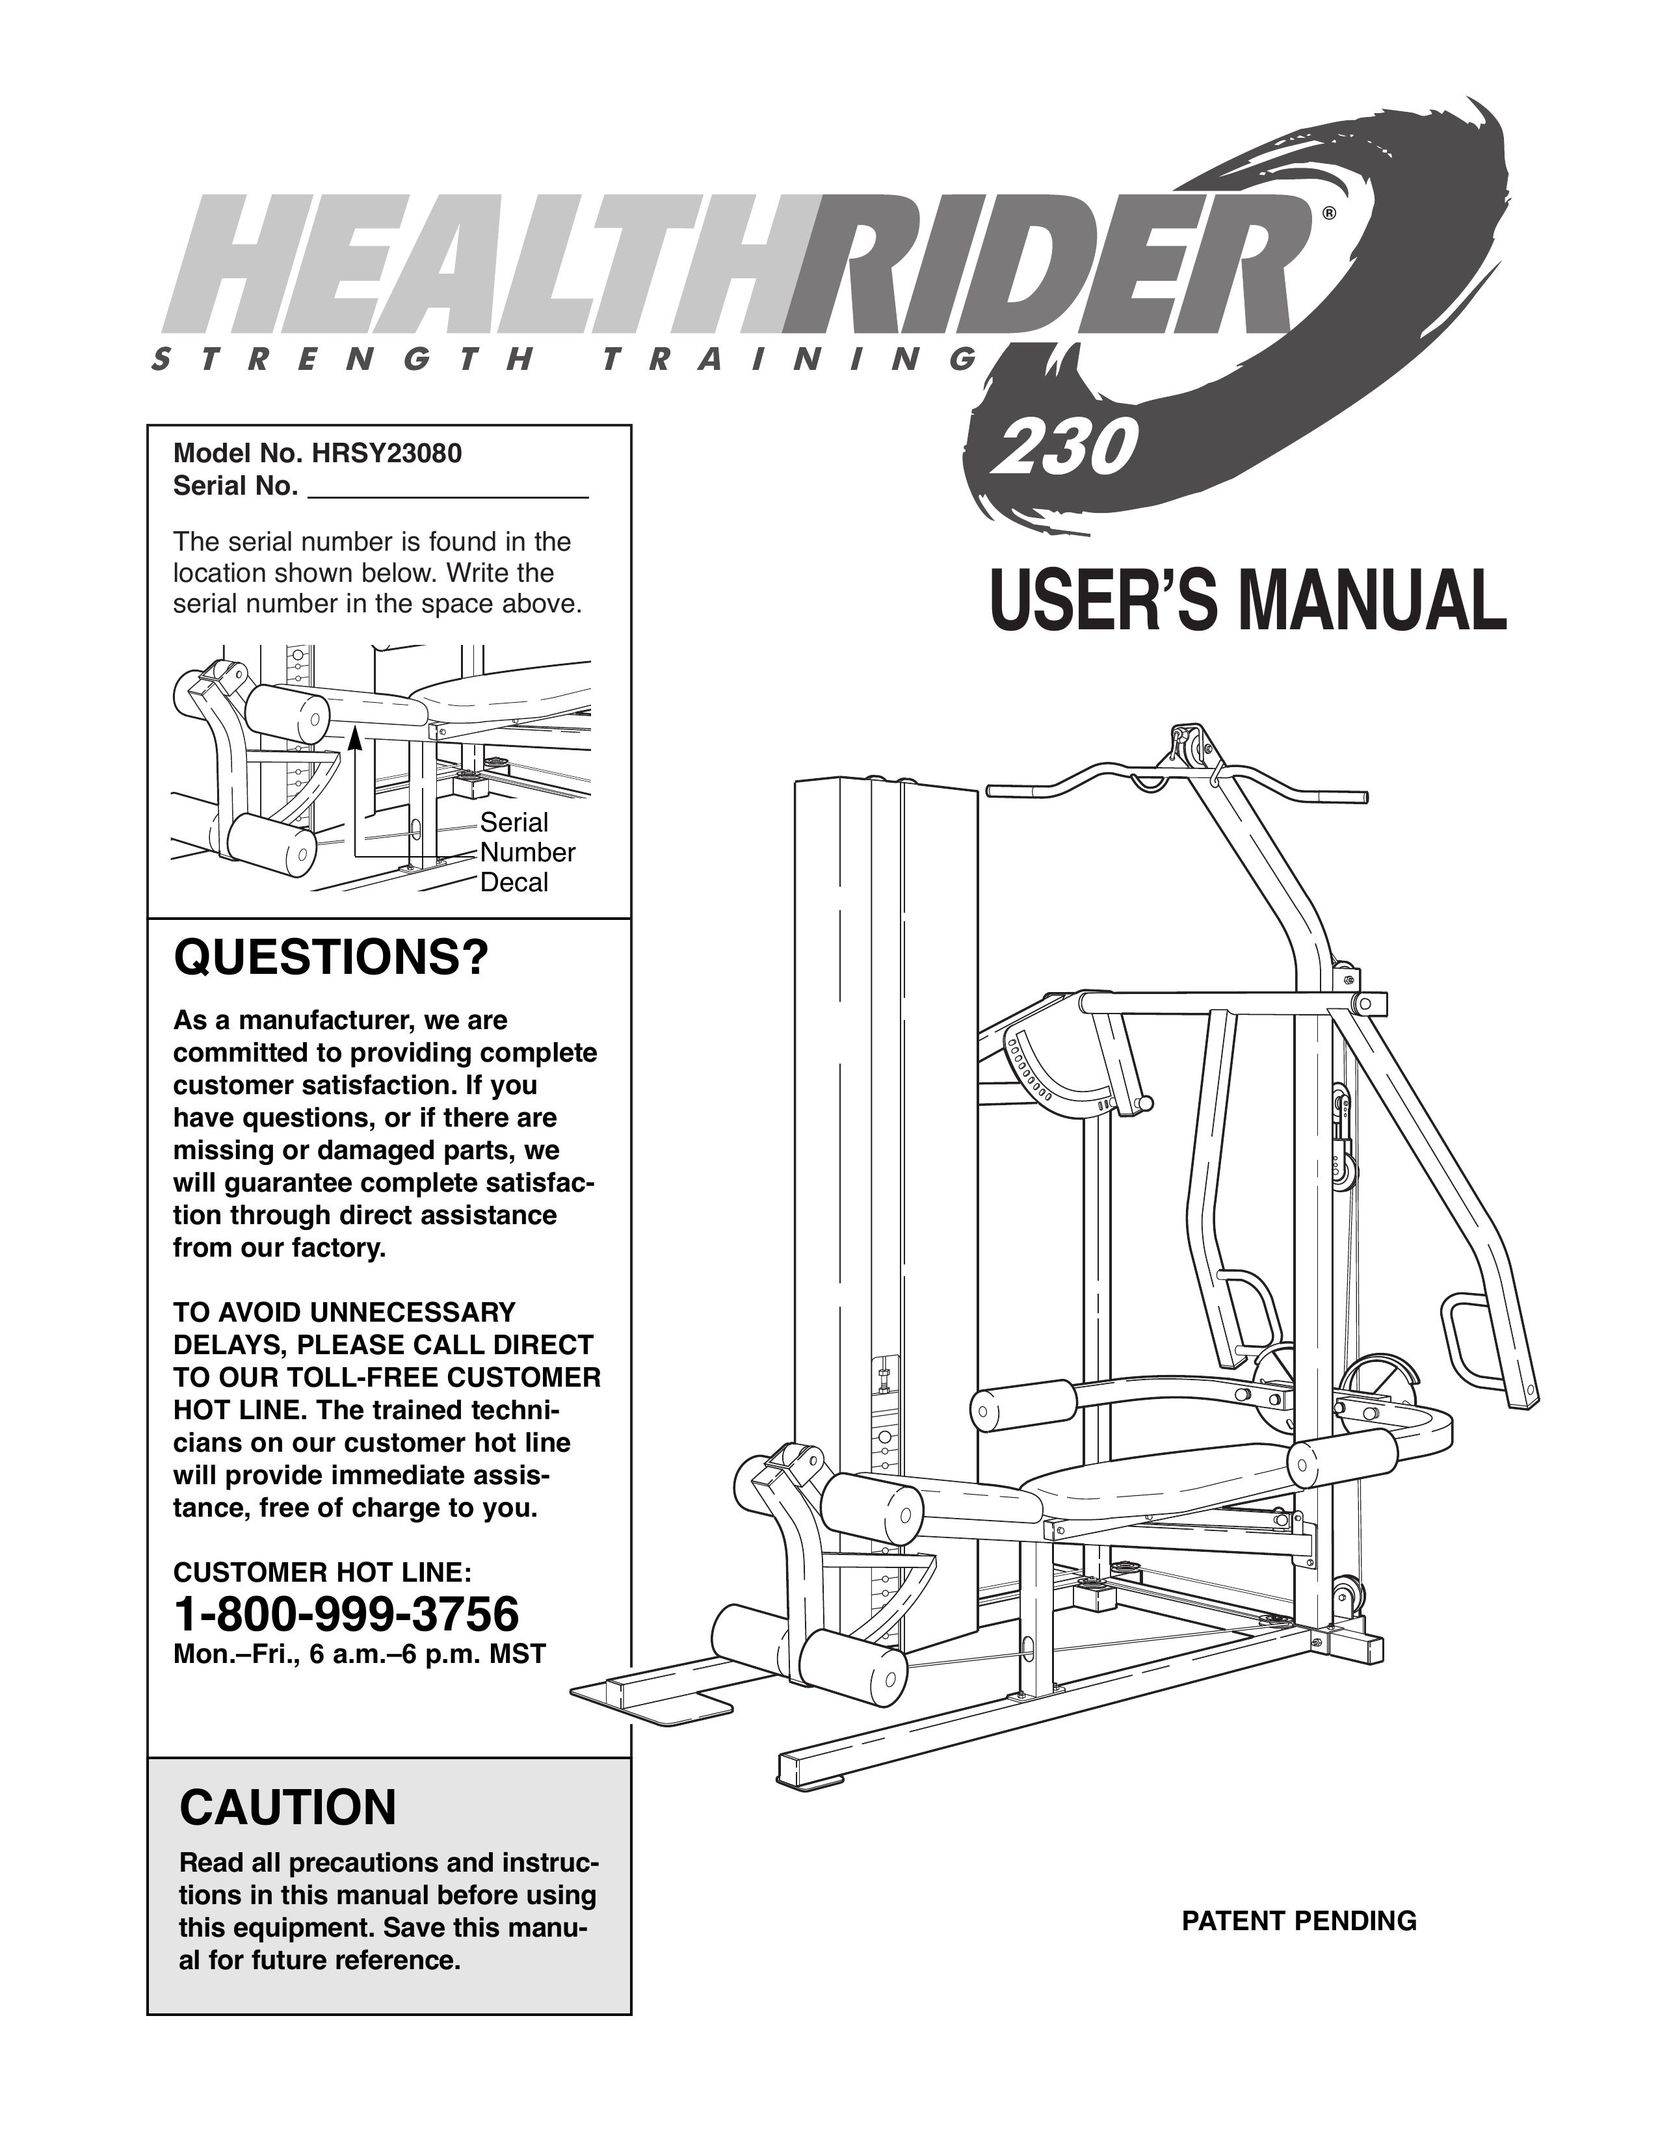 Healthrider HRSY23080 Home Gym User Manual